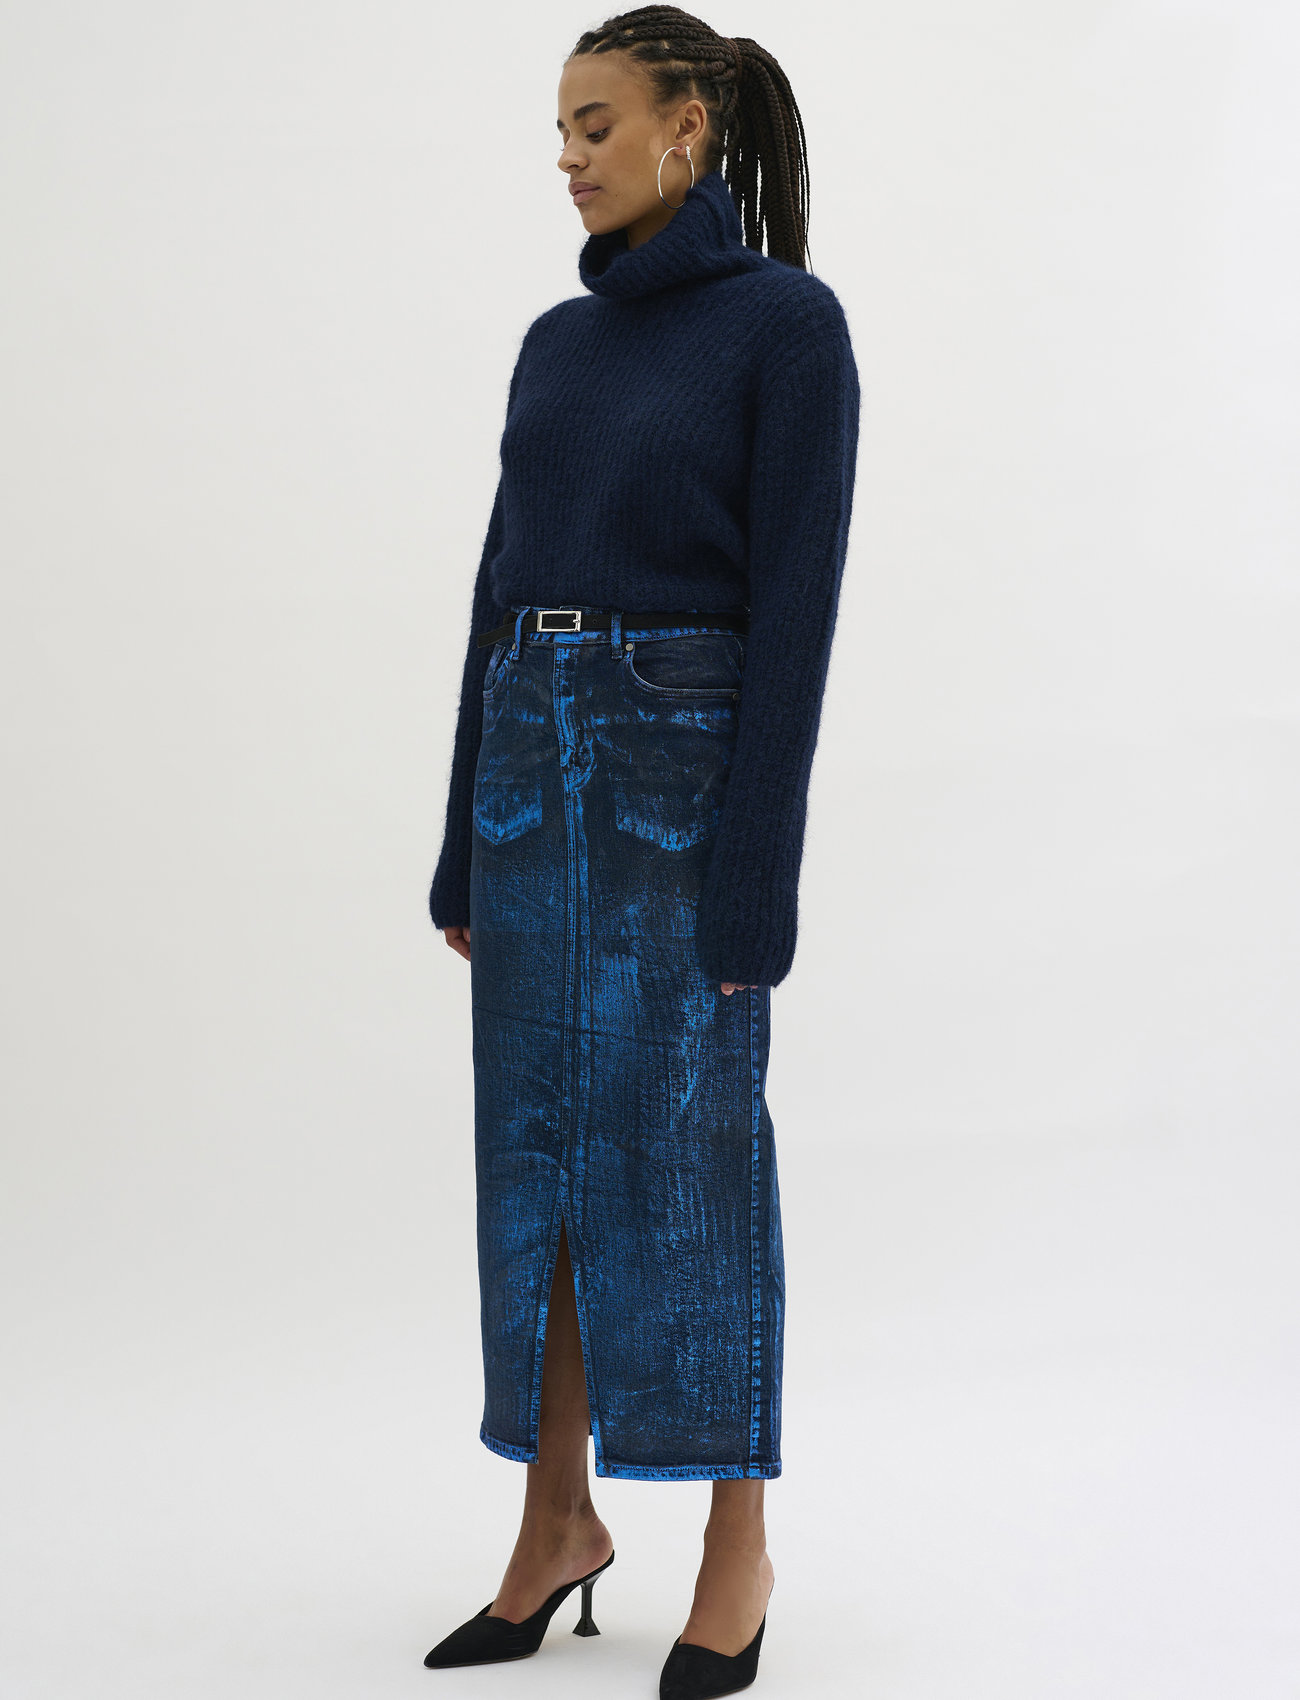 My Essential Wardrobe - AspenMW 153 Skirt - jeansröcke - dark blue w. blue glitter - 1